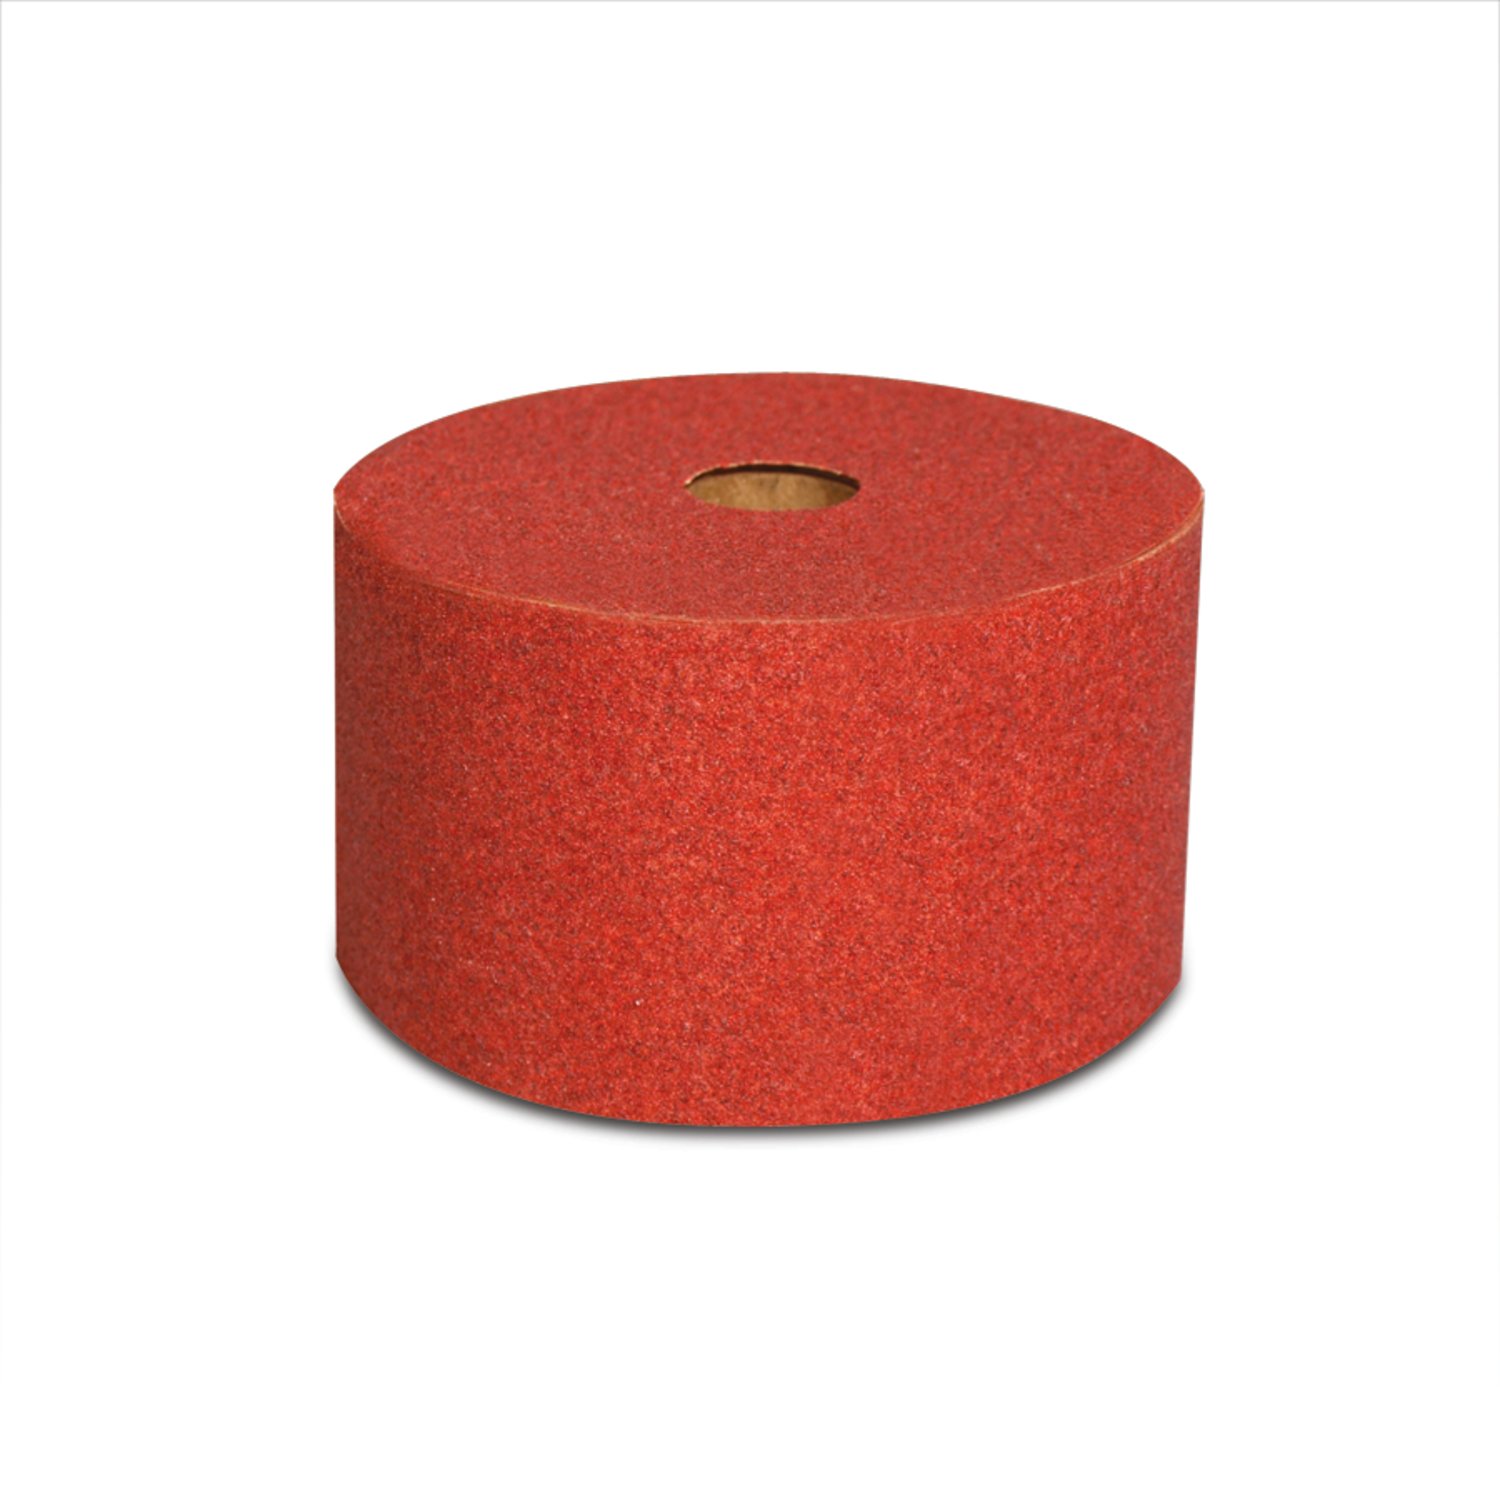 7000119927 - 3M Red Abrasive Stikit Sheet Roll, 01684, P220, 2-3/4 in x 25 yd, 6
rolls per case